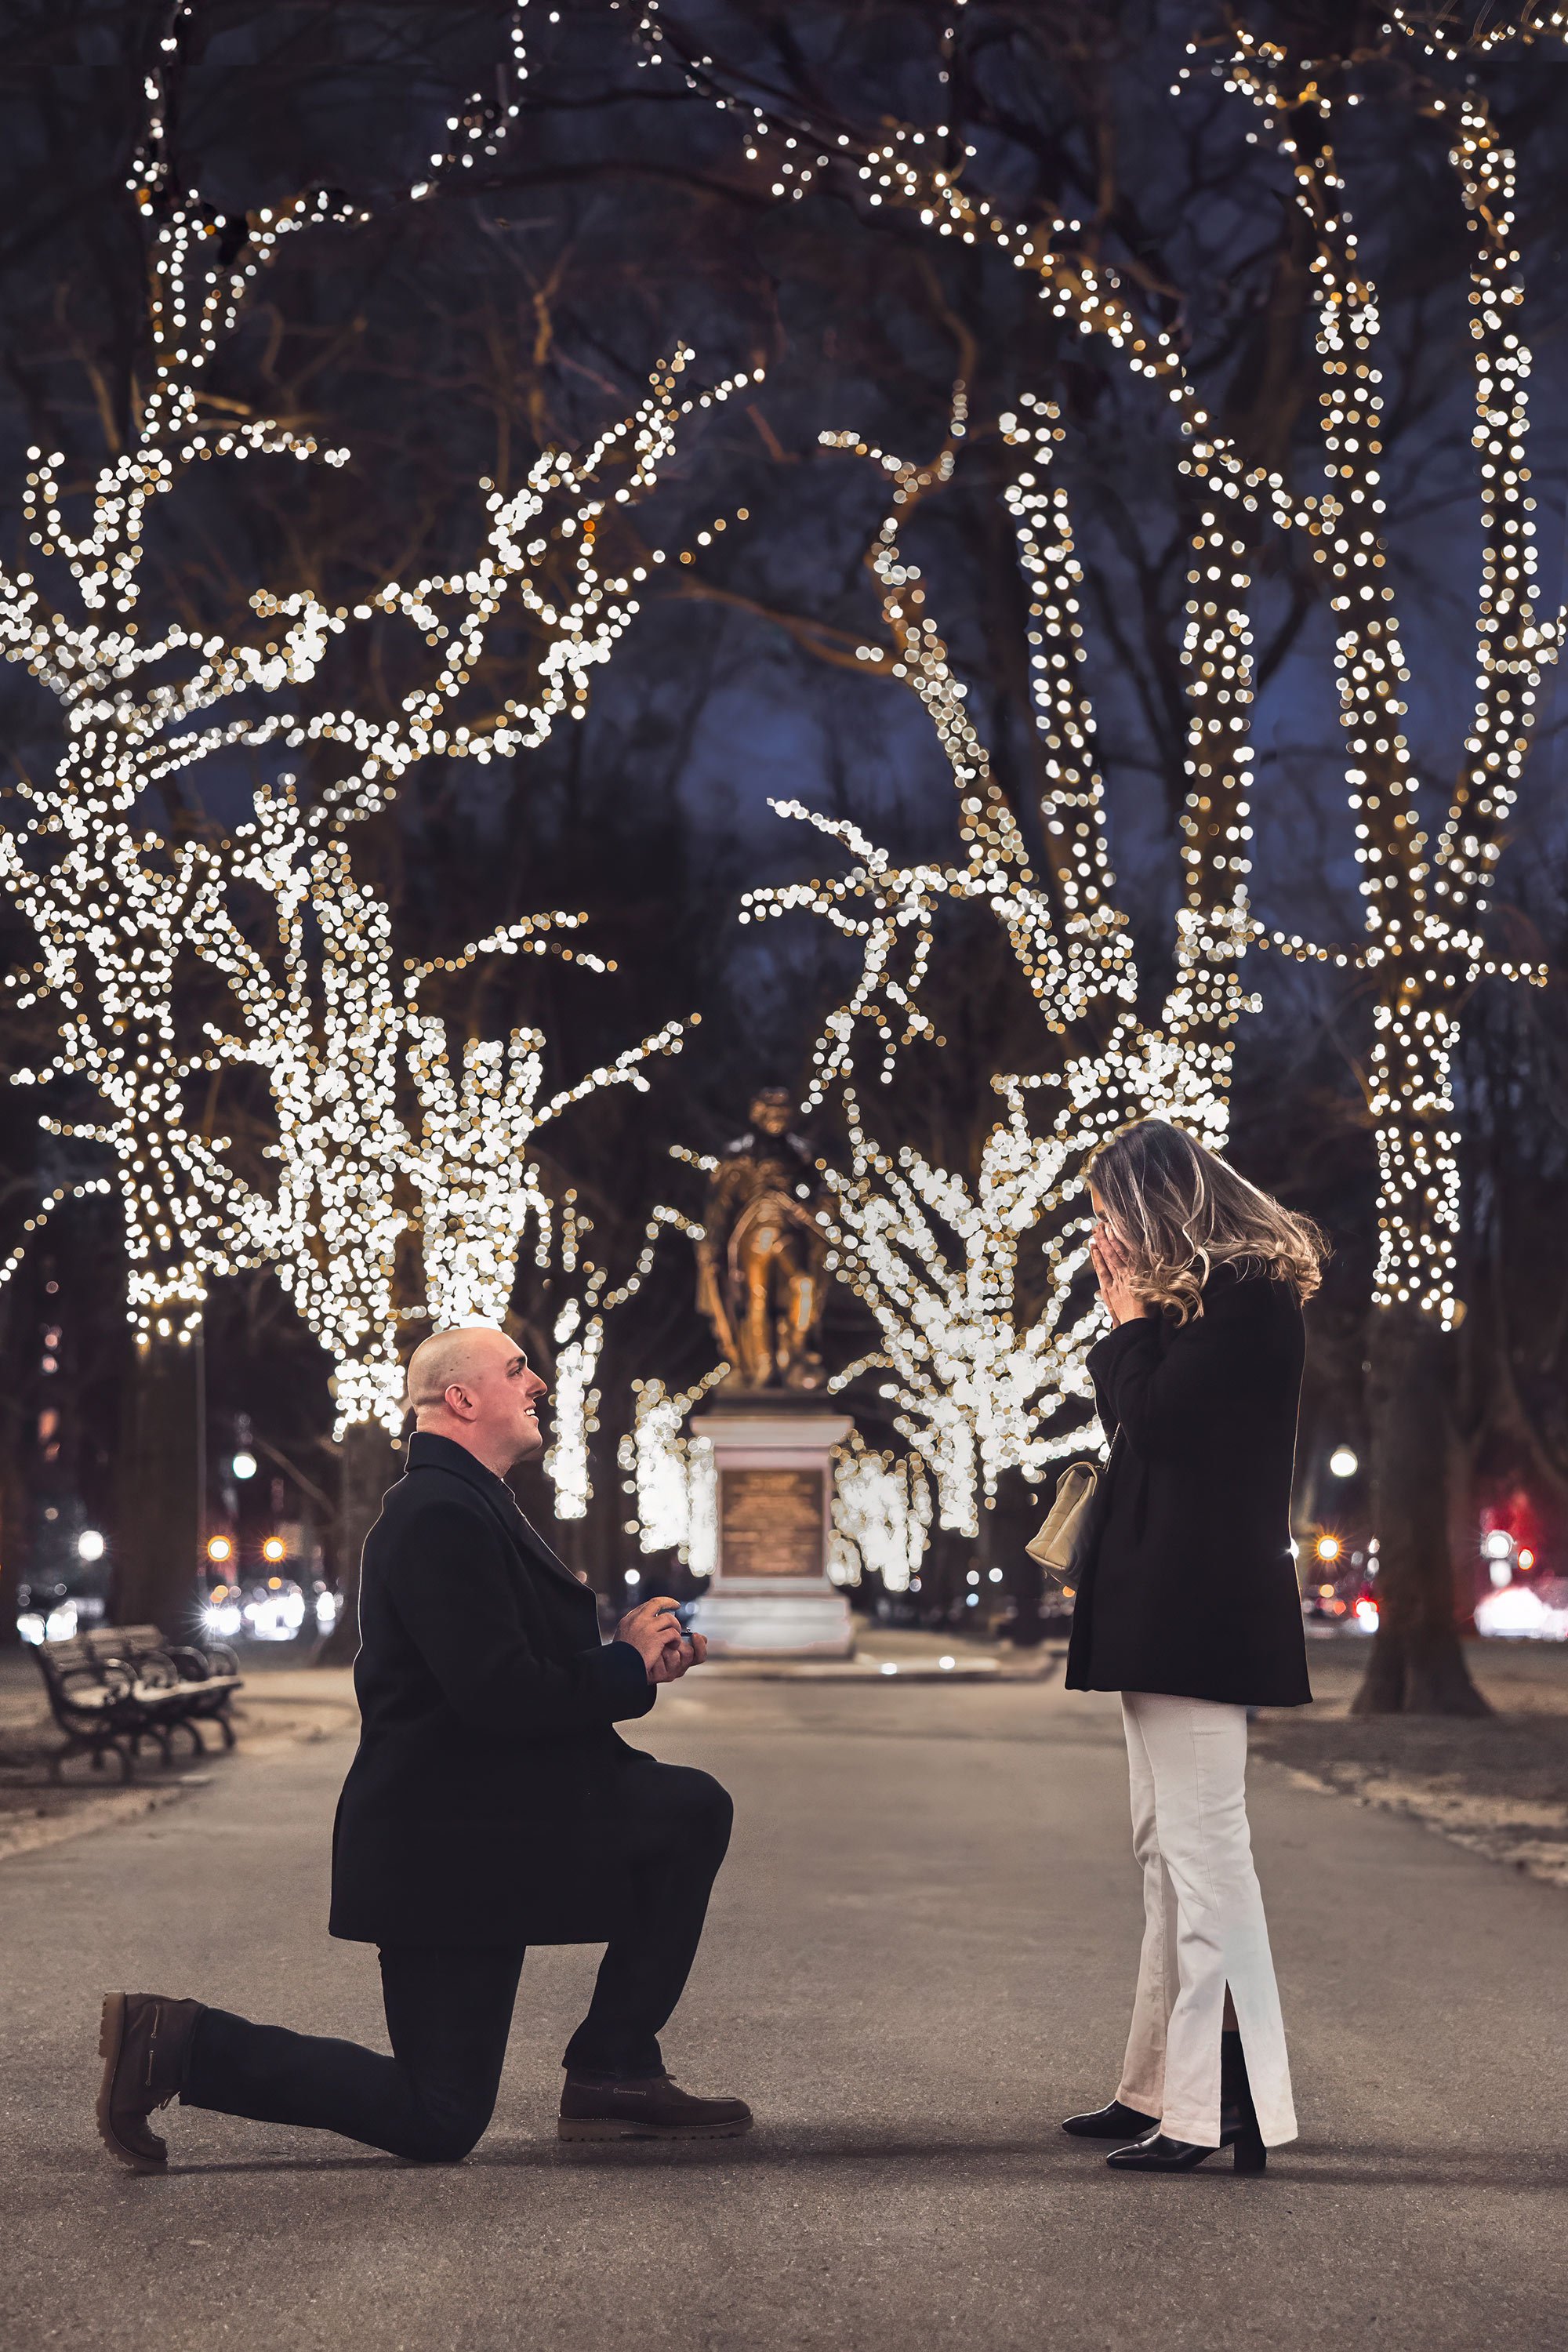 Boston Surprise Engagement Proposal Photographer | Stephen Grant Photography